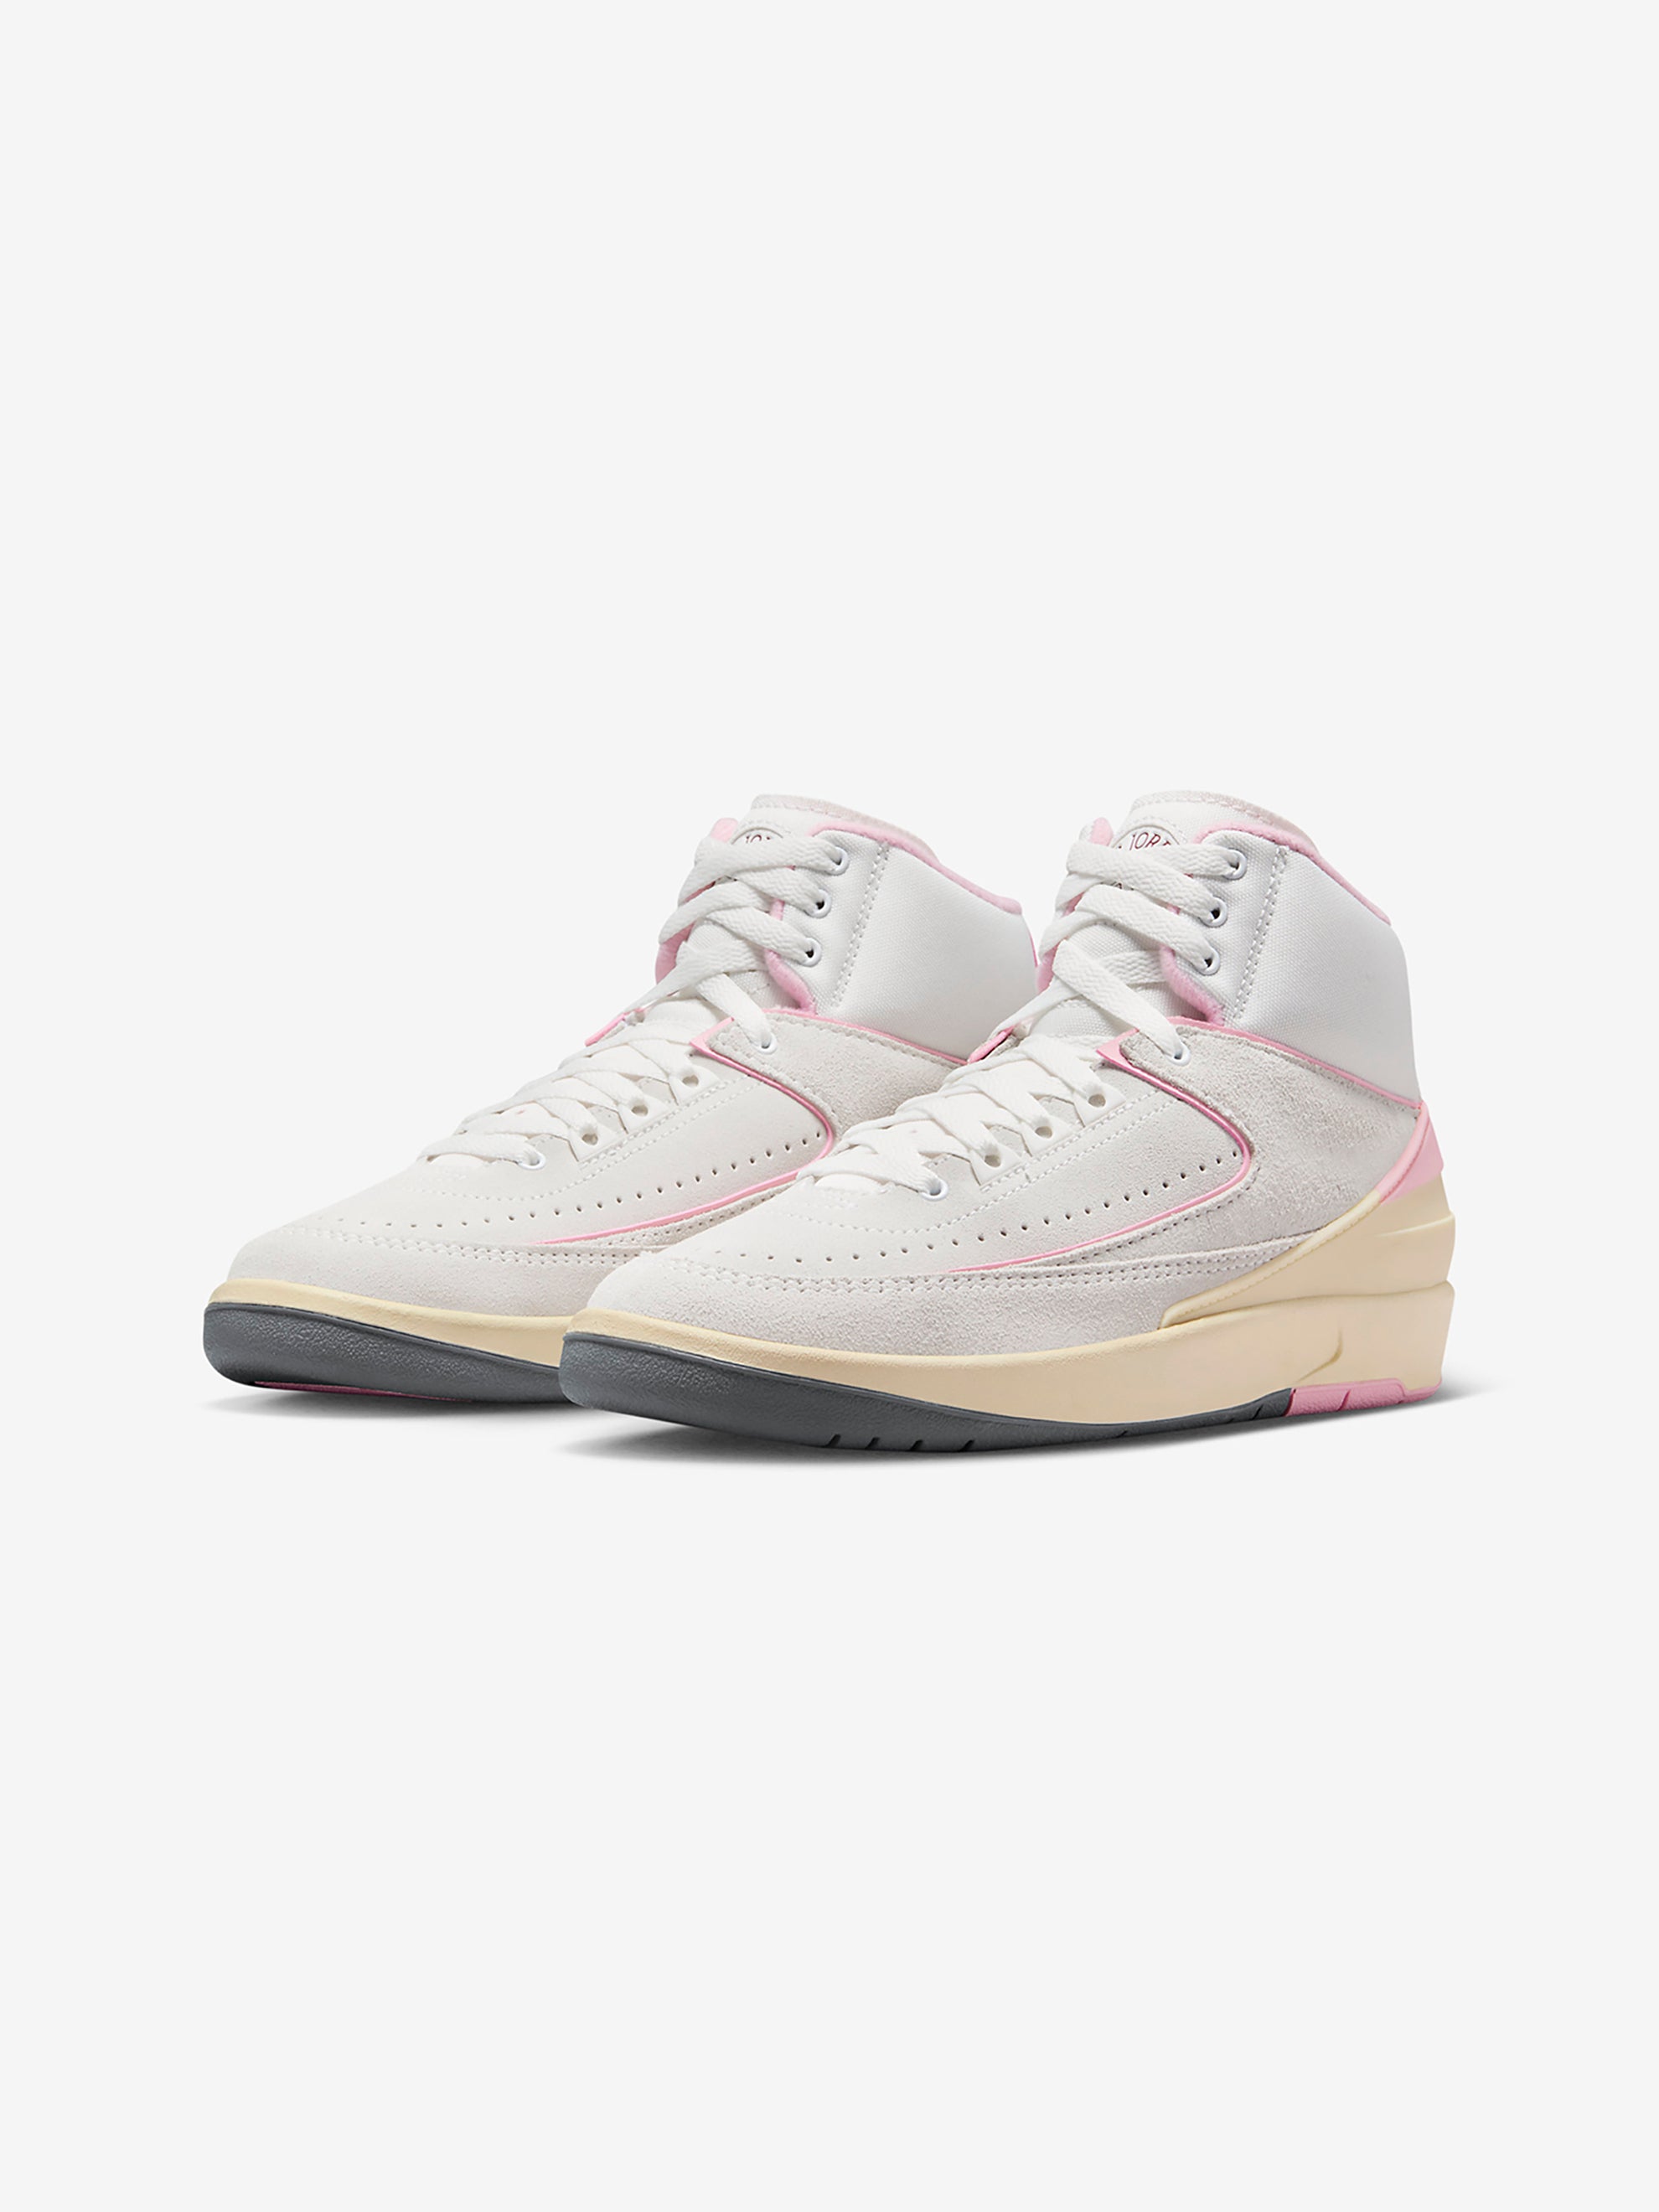 W Air Jordan 2 Retro (Summit White/Gym Red/Med Soft Pink)